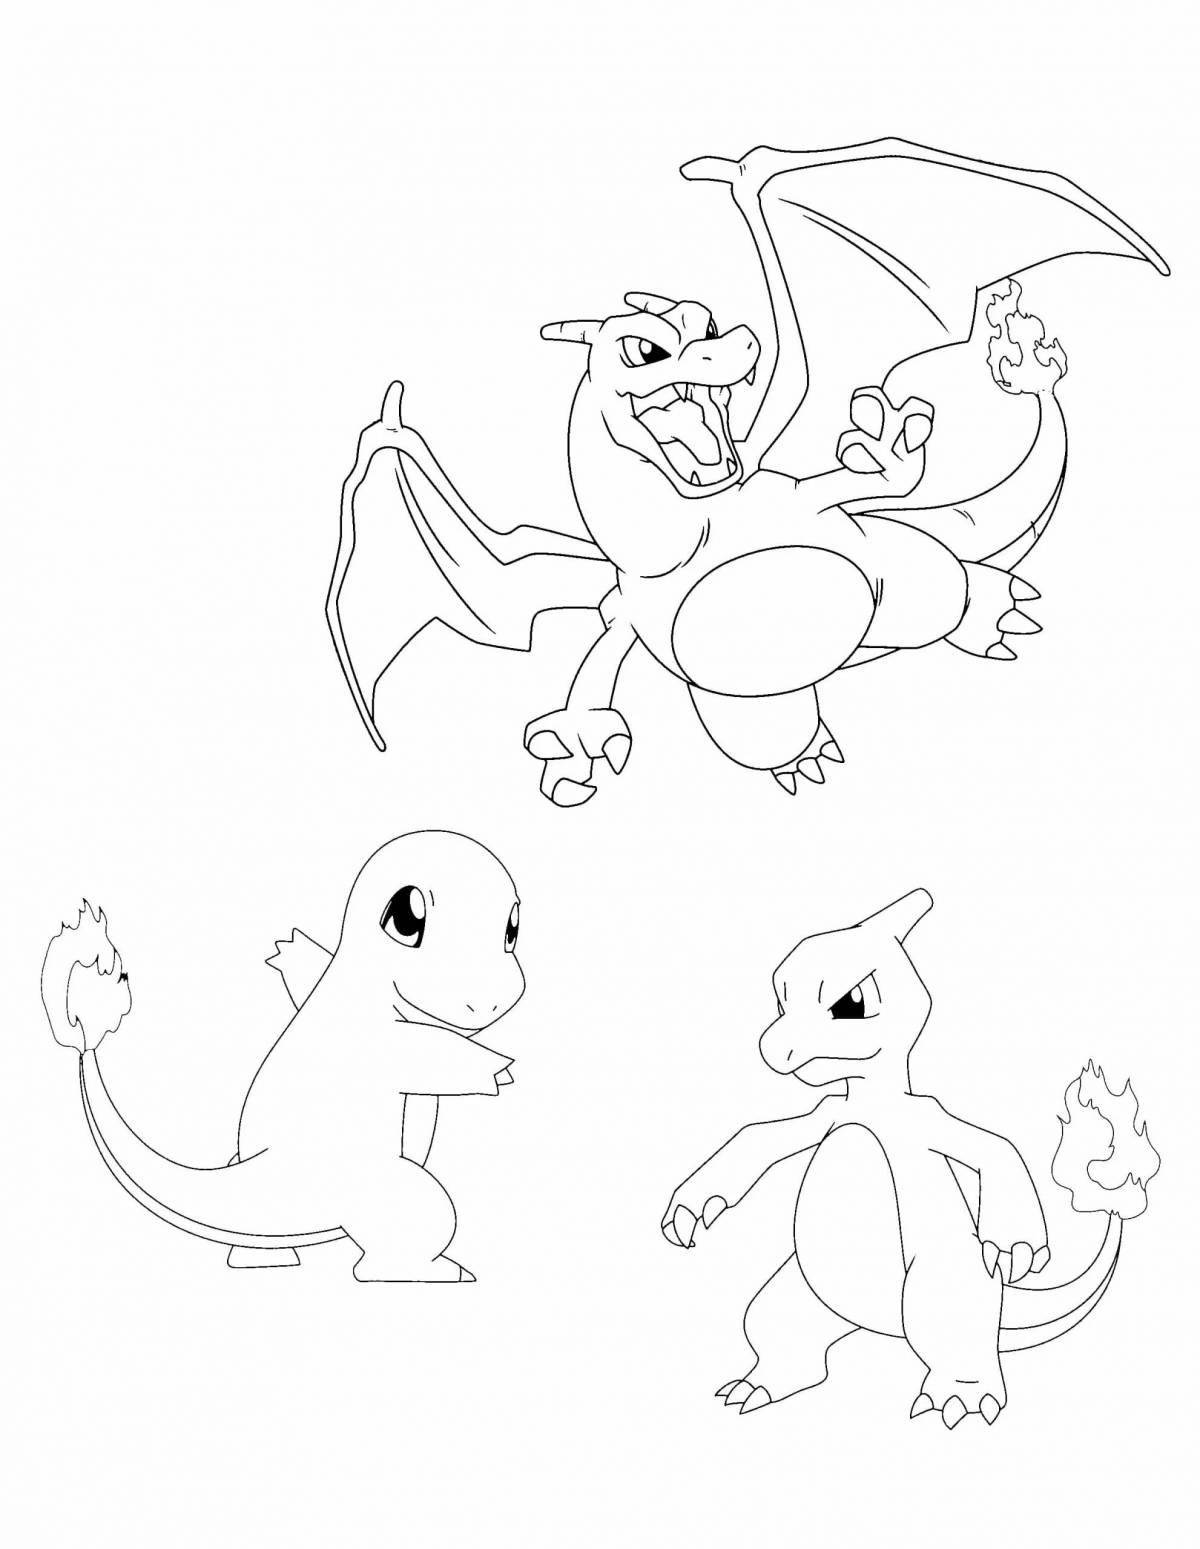 Impressive charmander pokemon coloring page